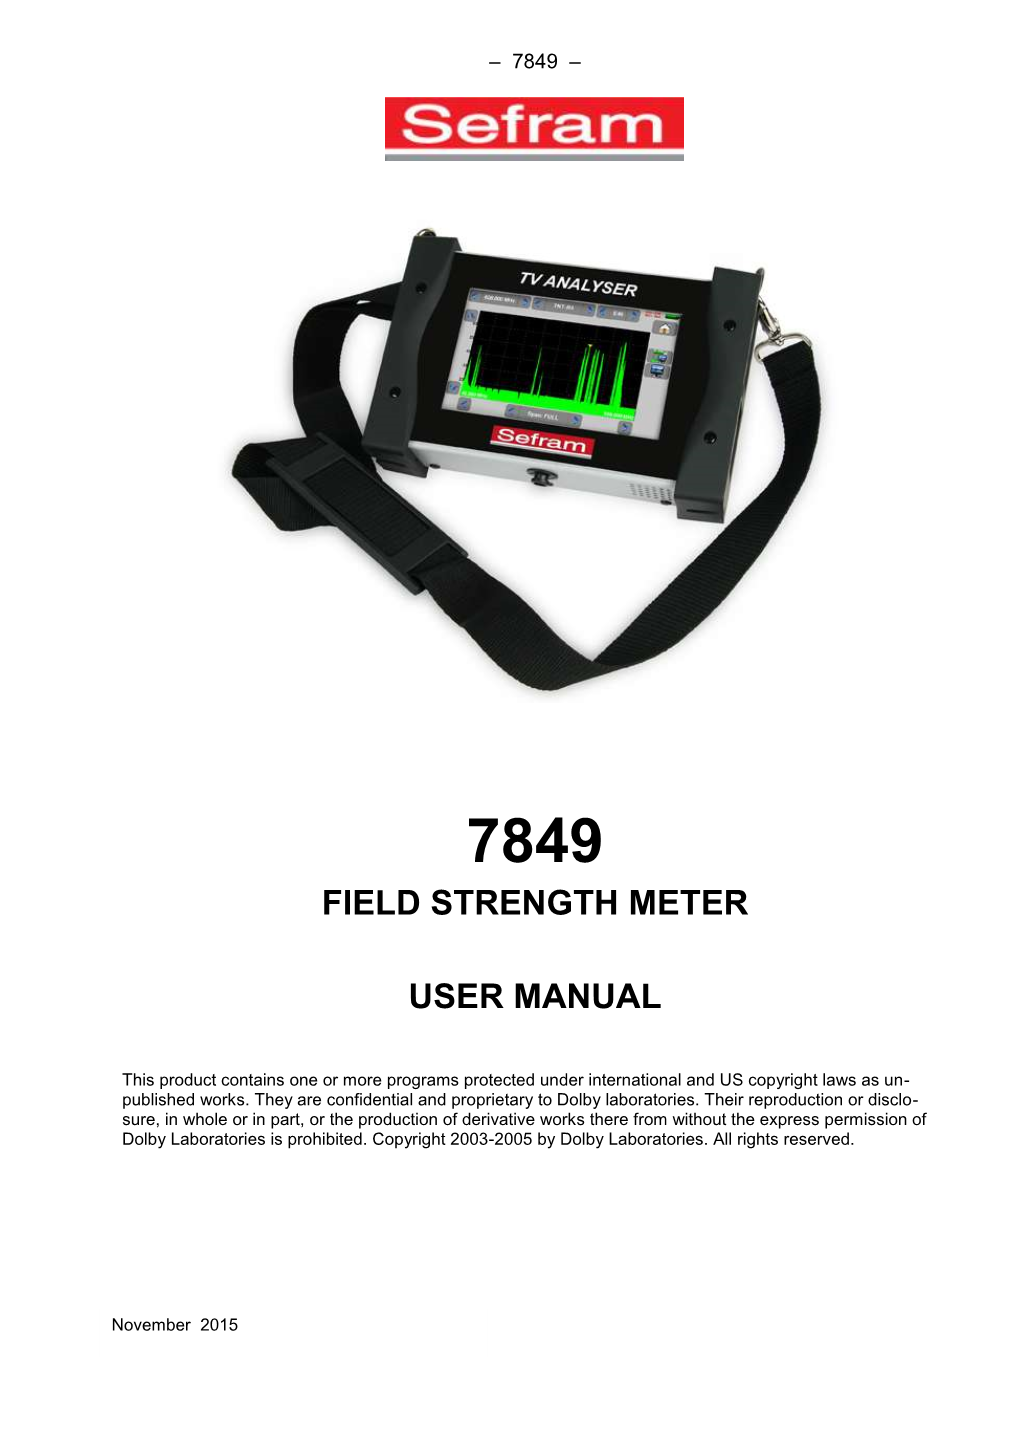 Field Strength Meter User Manual